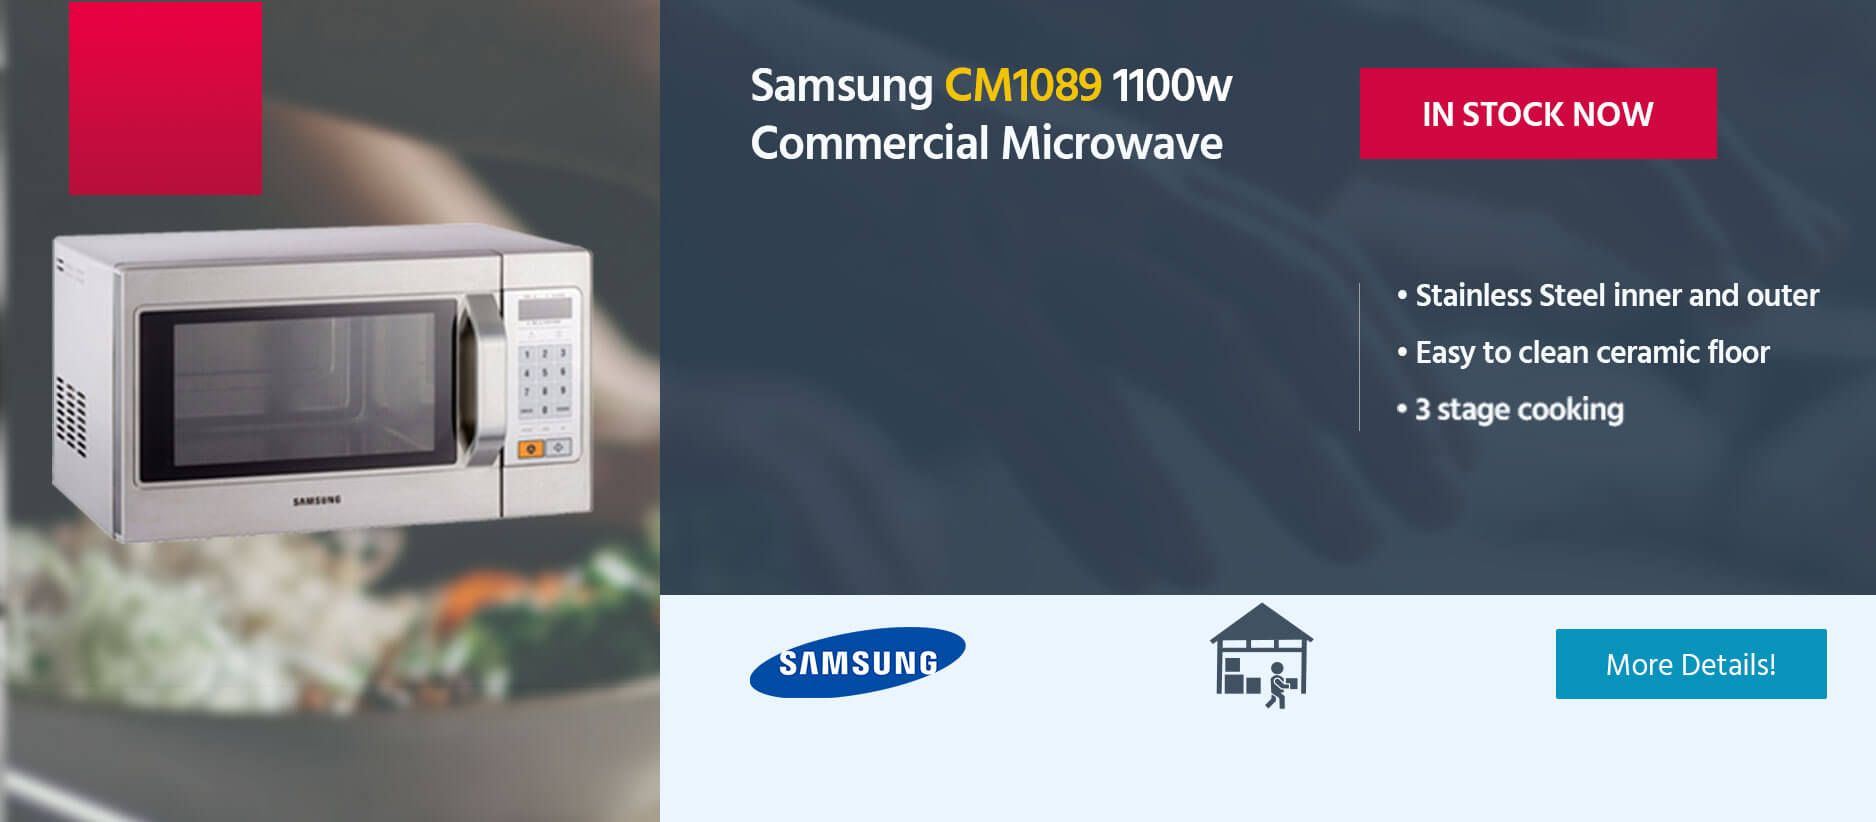 Samsung CM1089 1100w Commercial Microwave - CB937